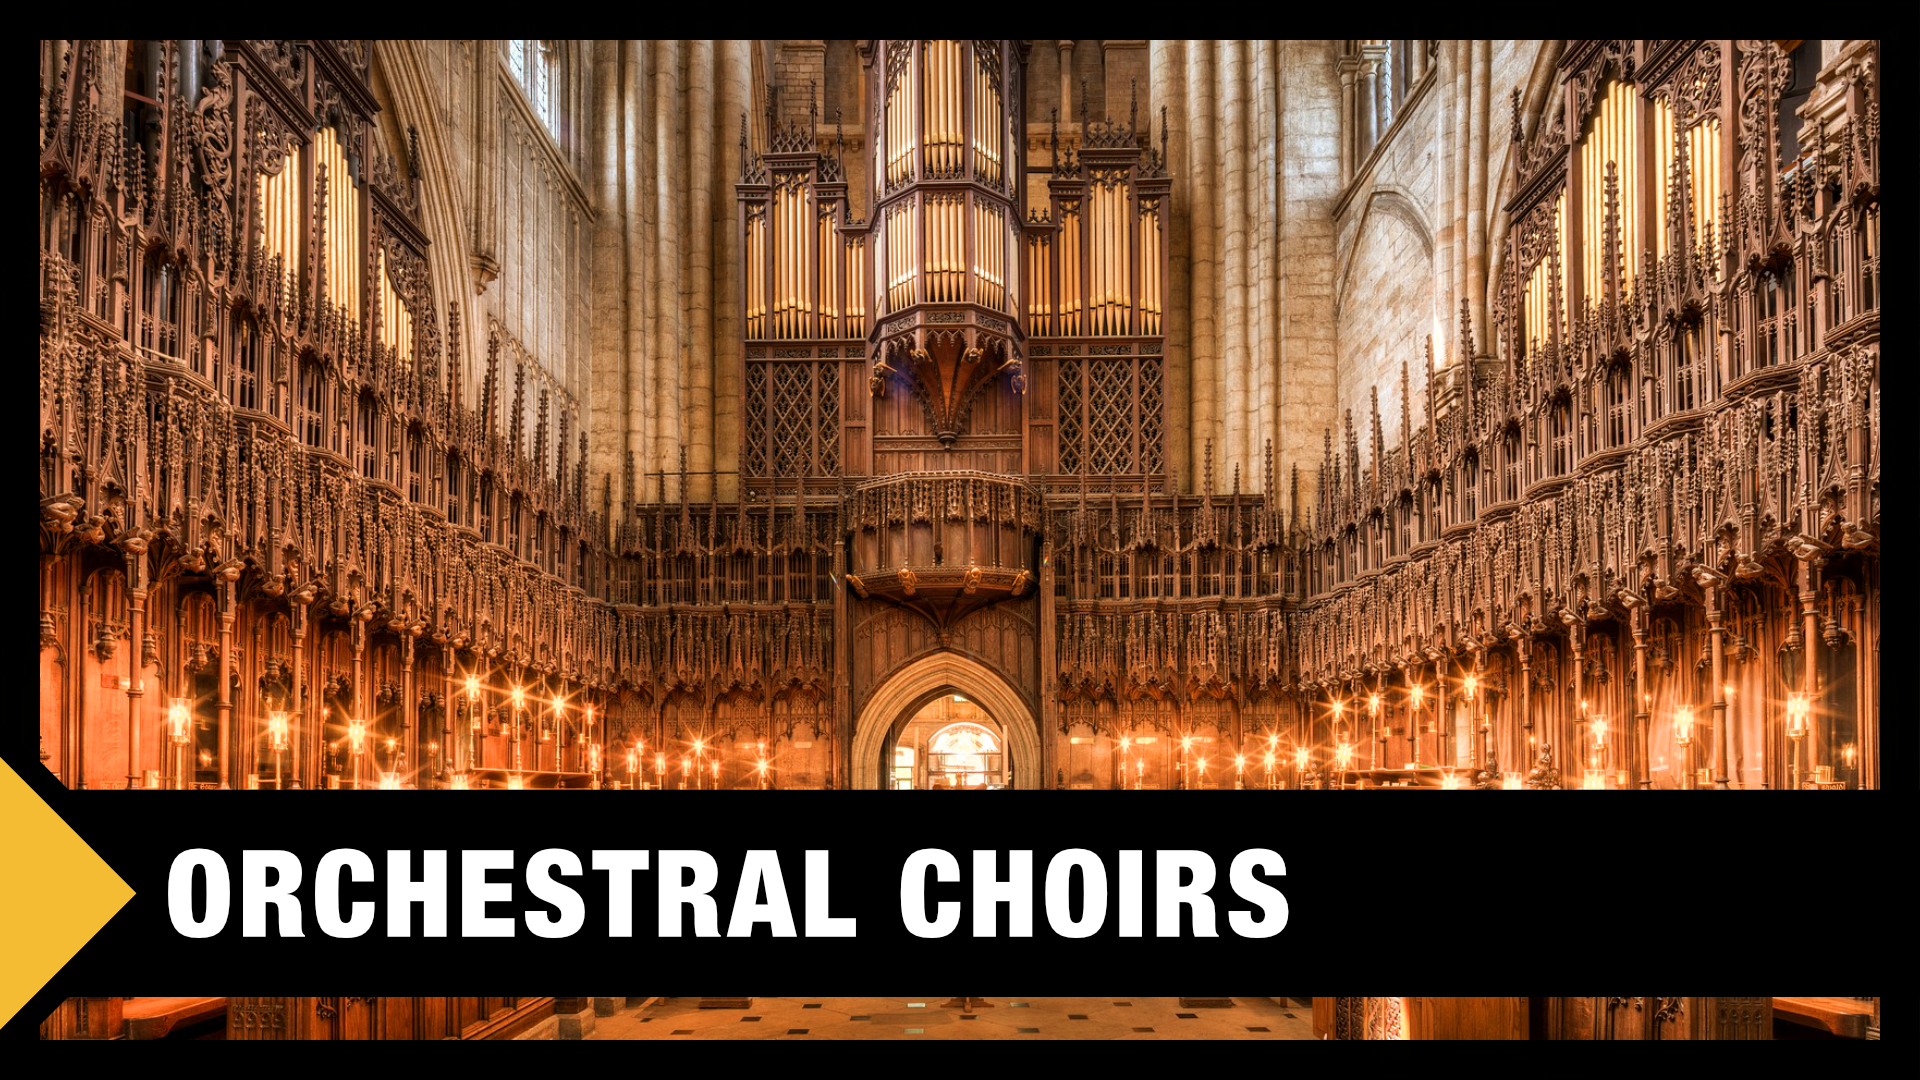 east west symphonic choirs vst torrent